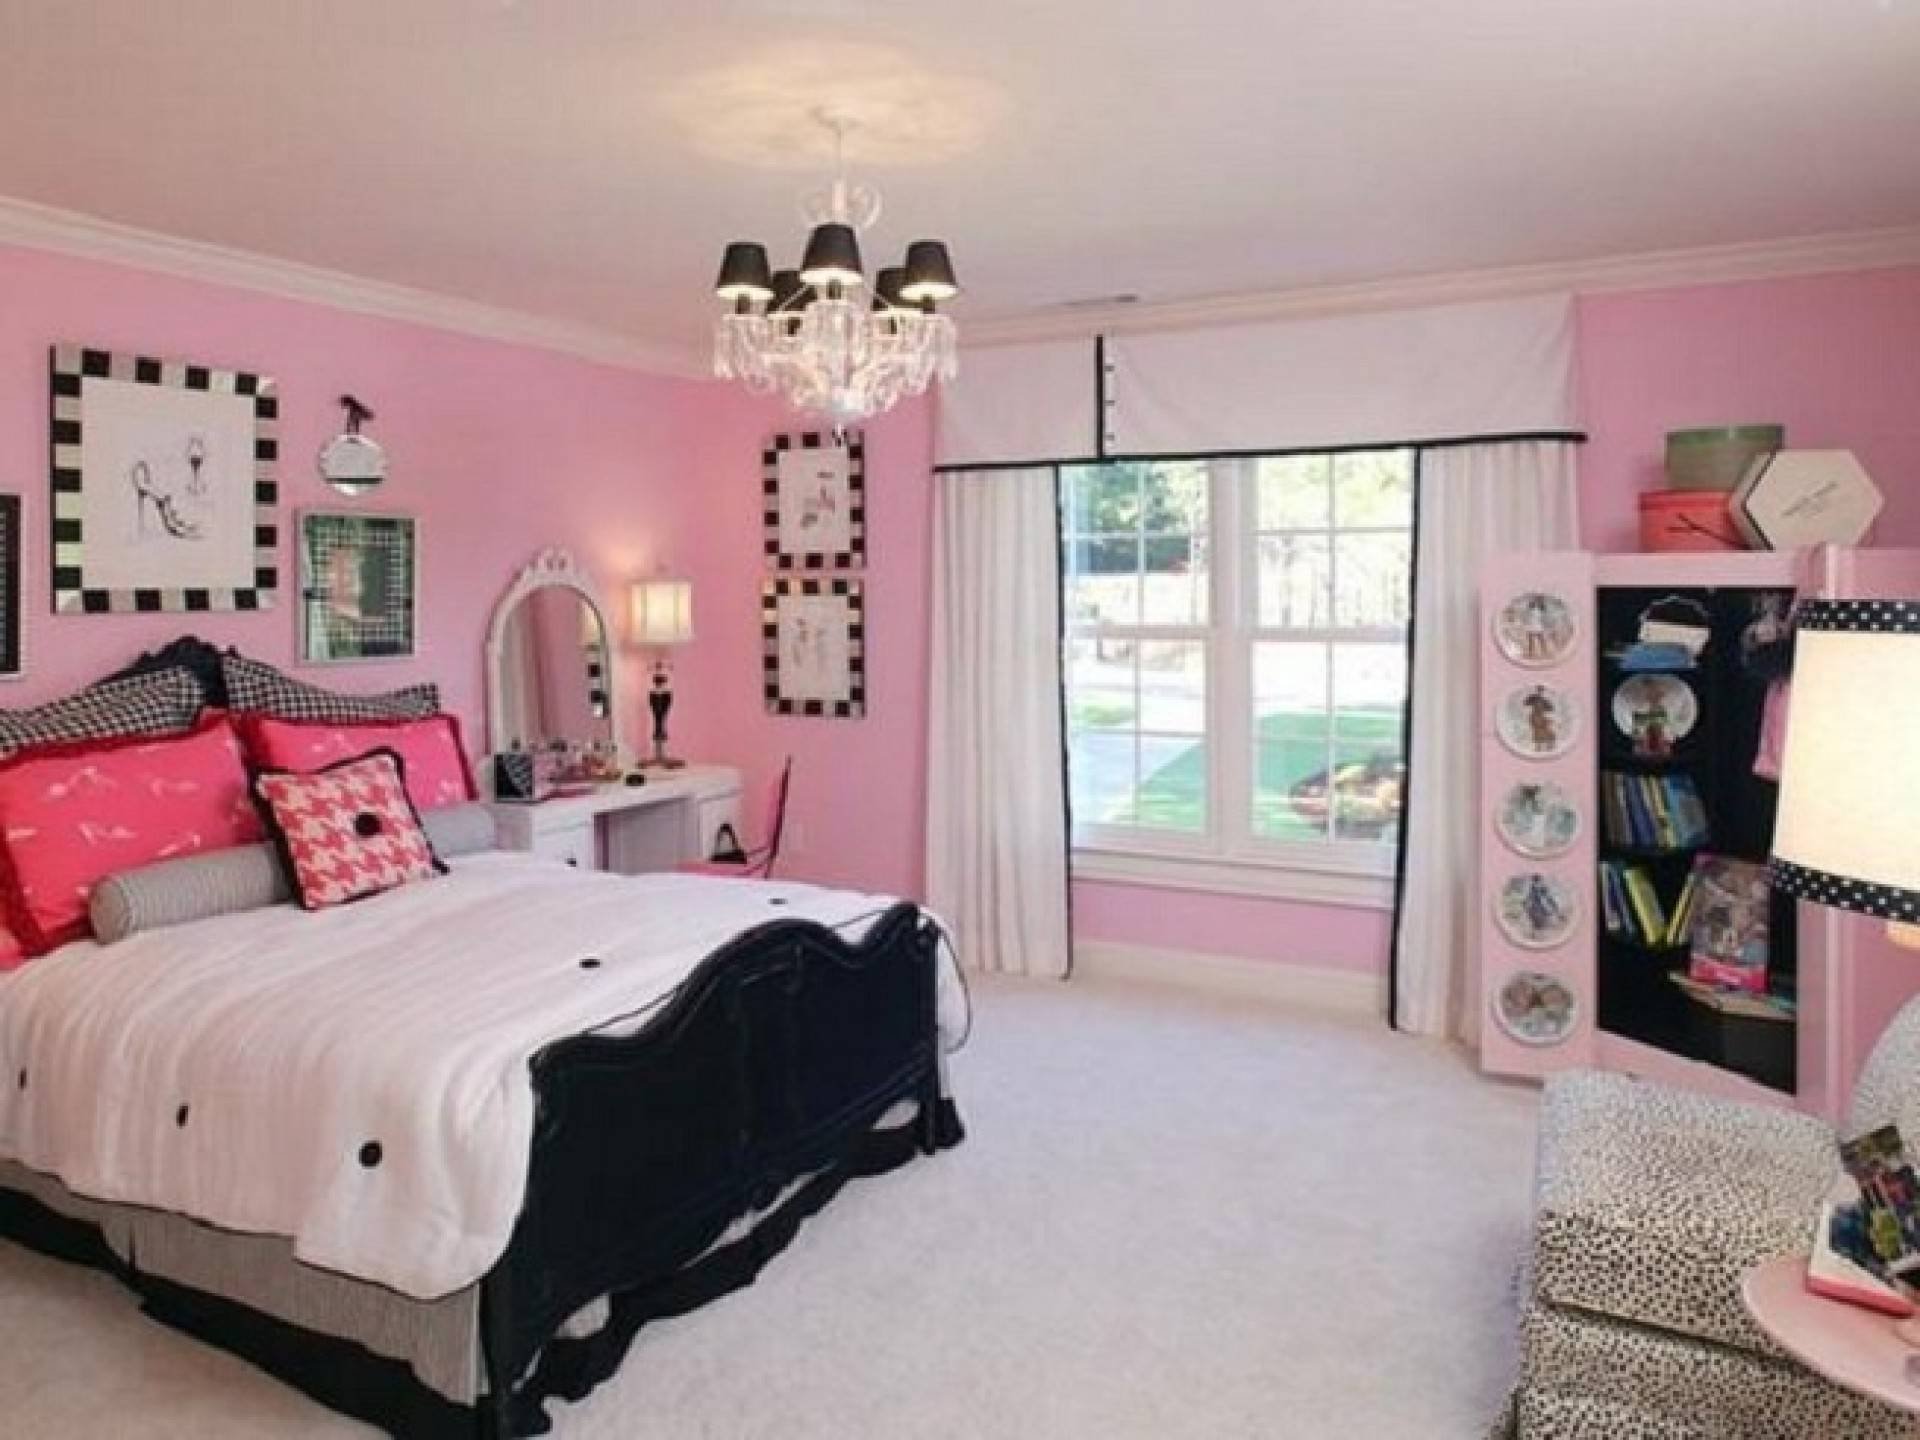 Комната в розовых тонах. Спальная комната для девочки. Комната для девочки розового цвета. Спальни для подростков девочек. Комната для девочки подростка.